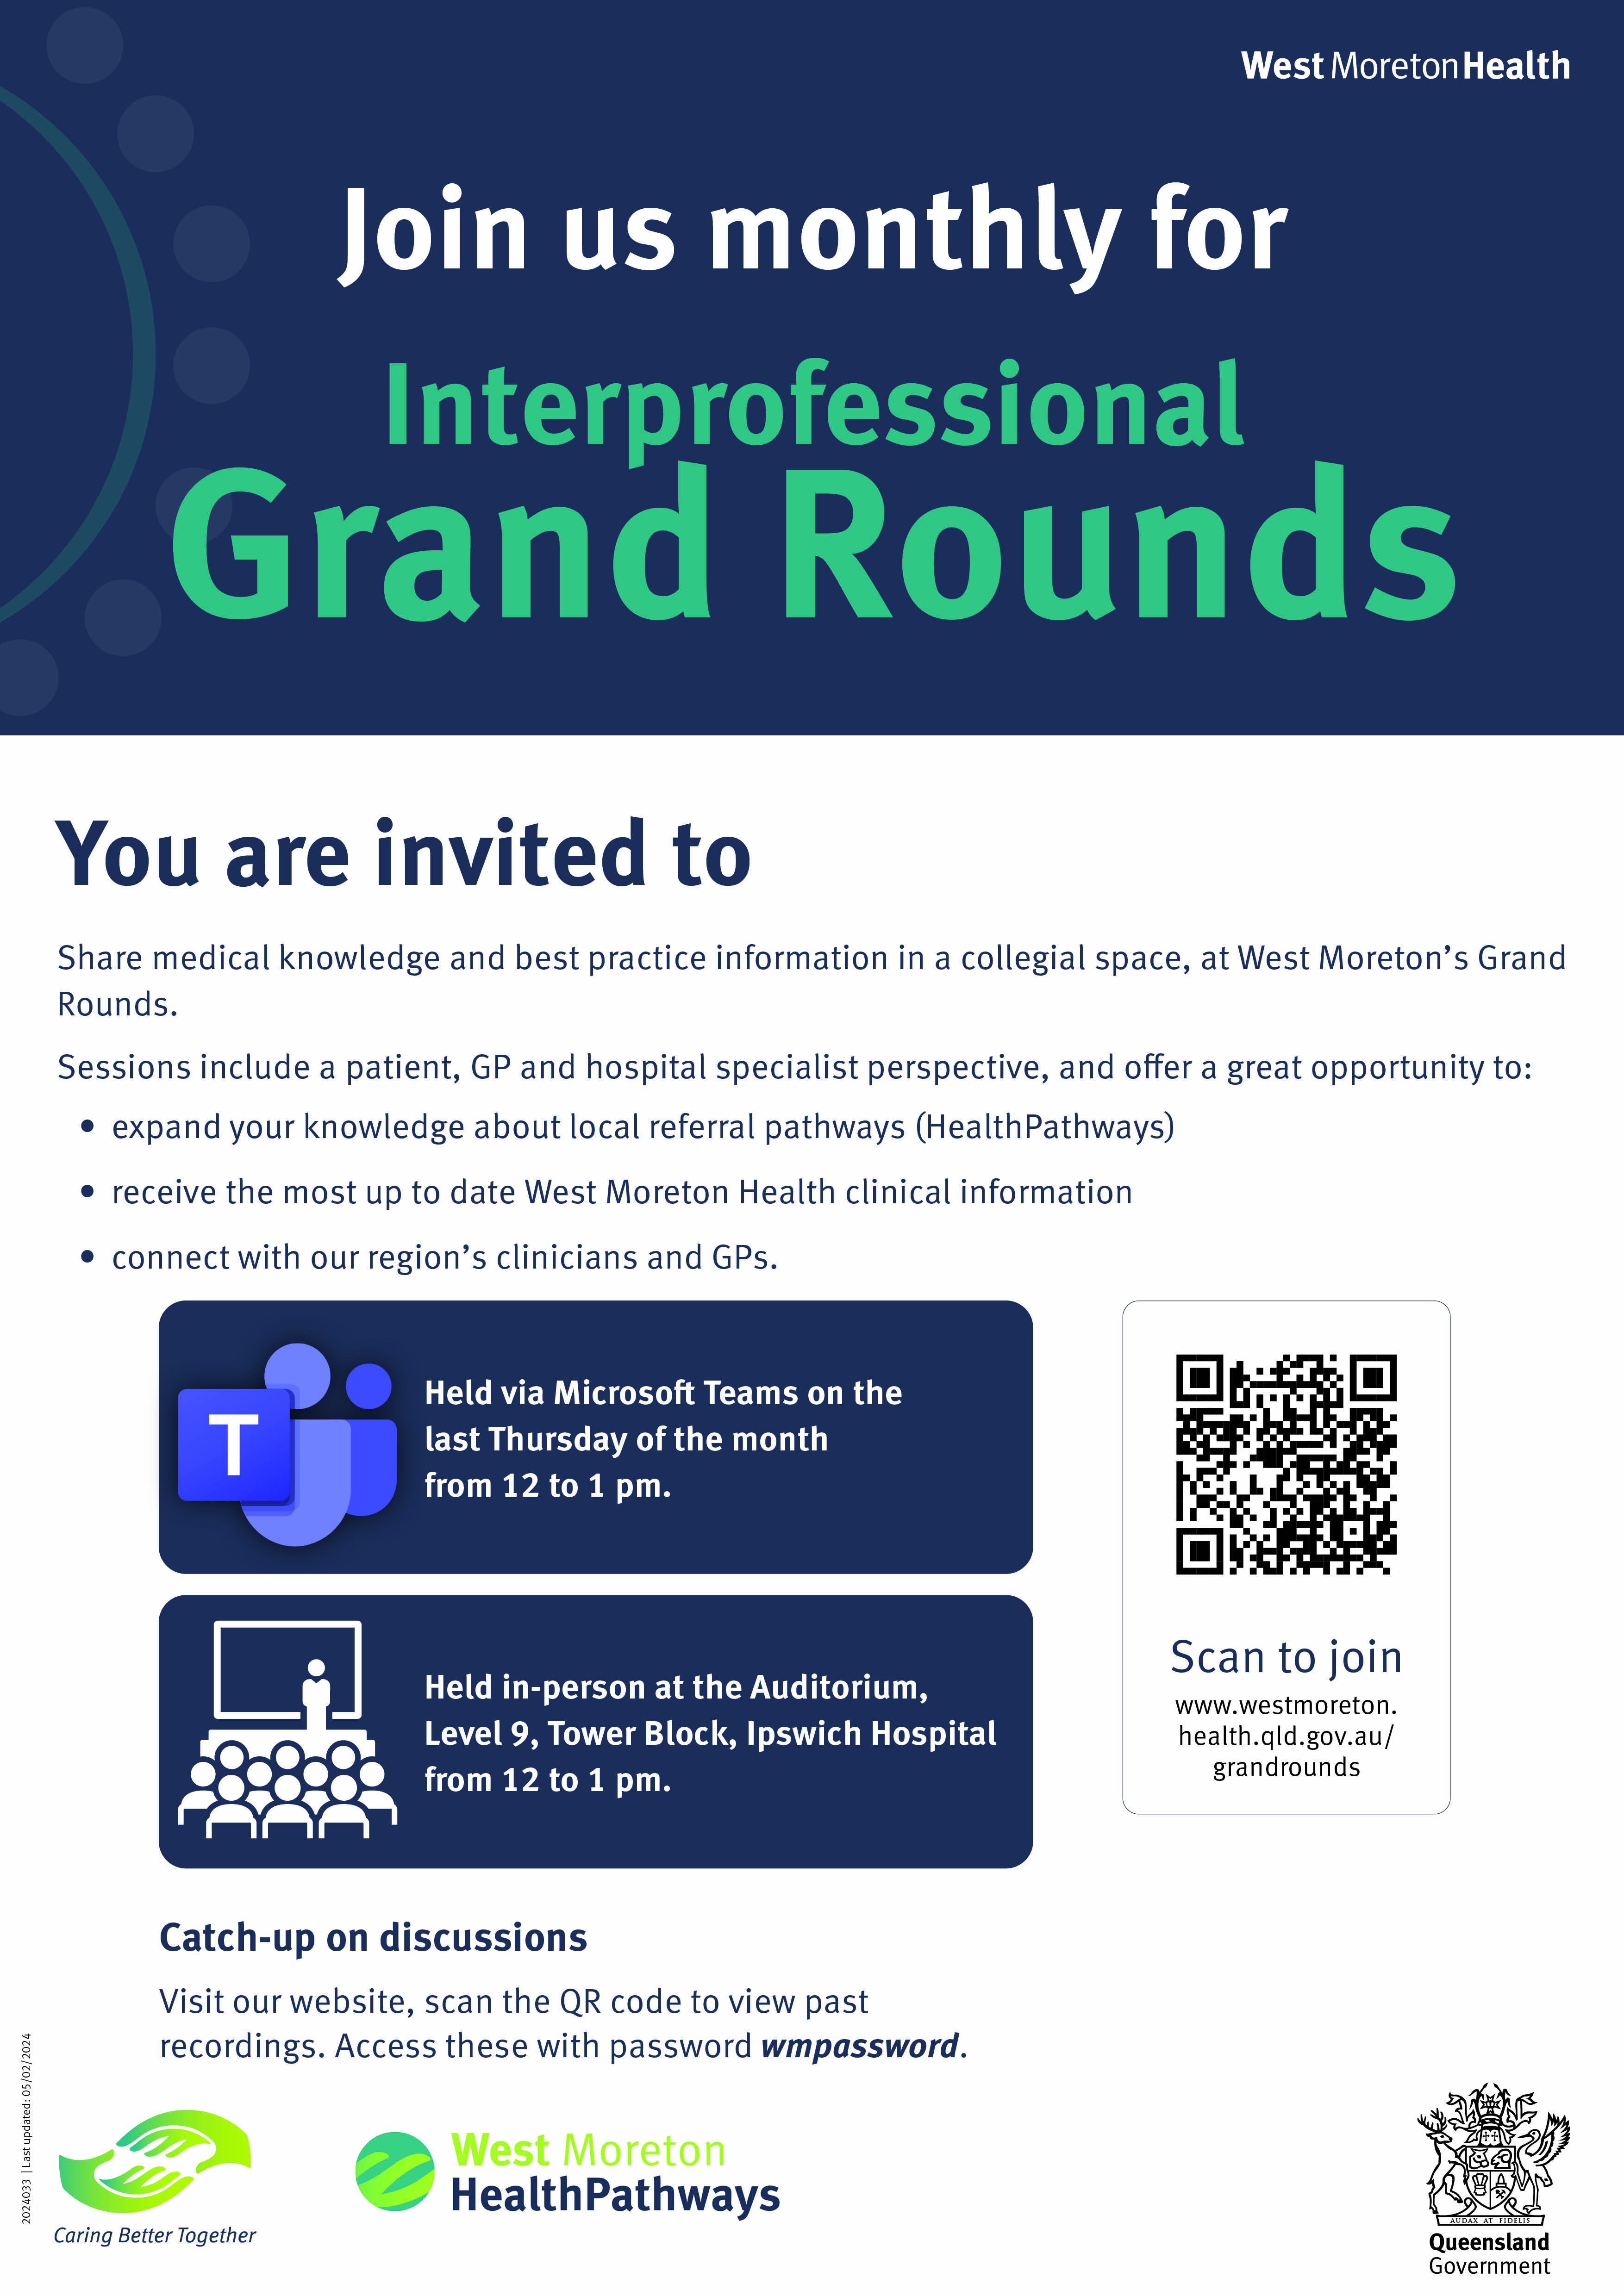 Interprofessional Grand Rounds